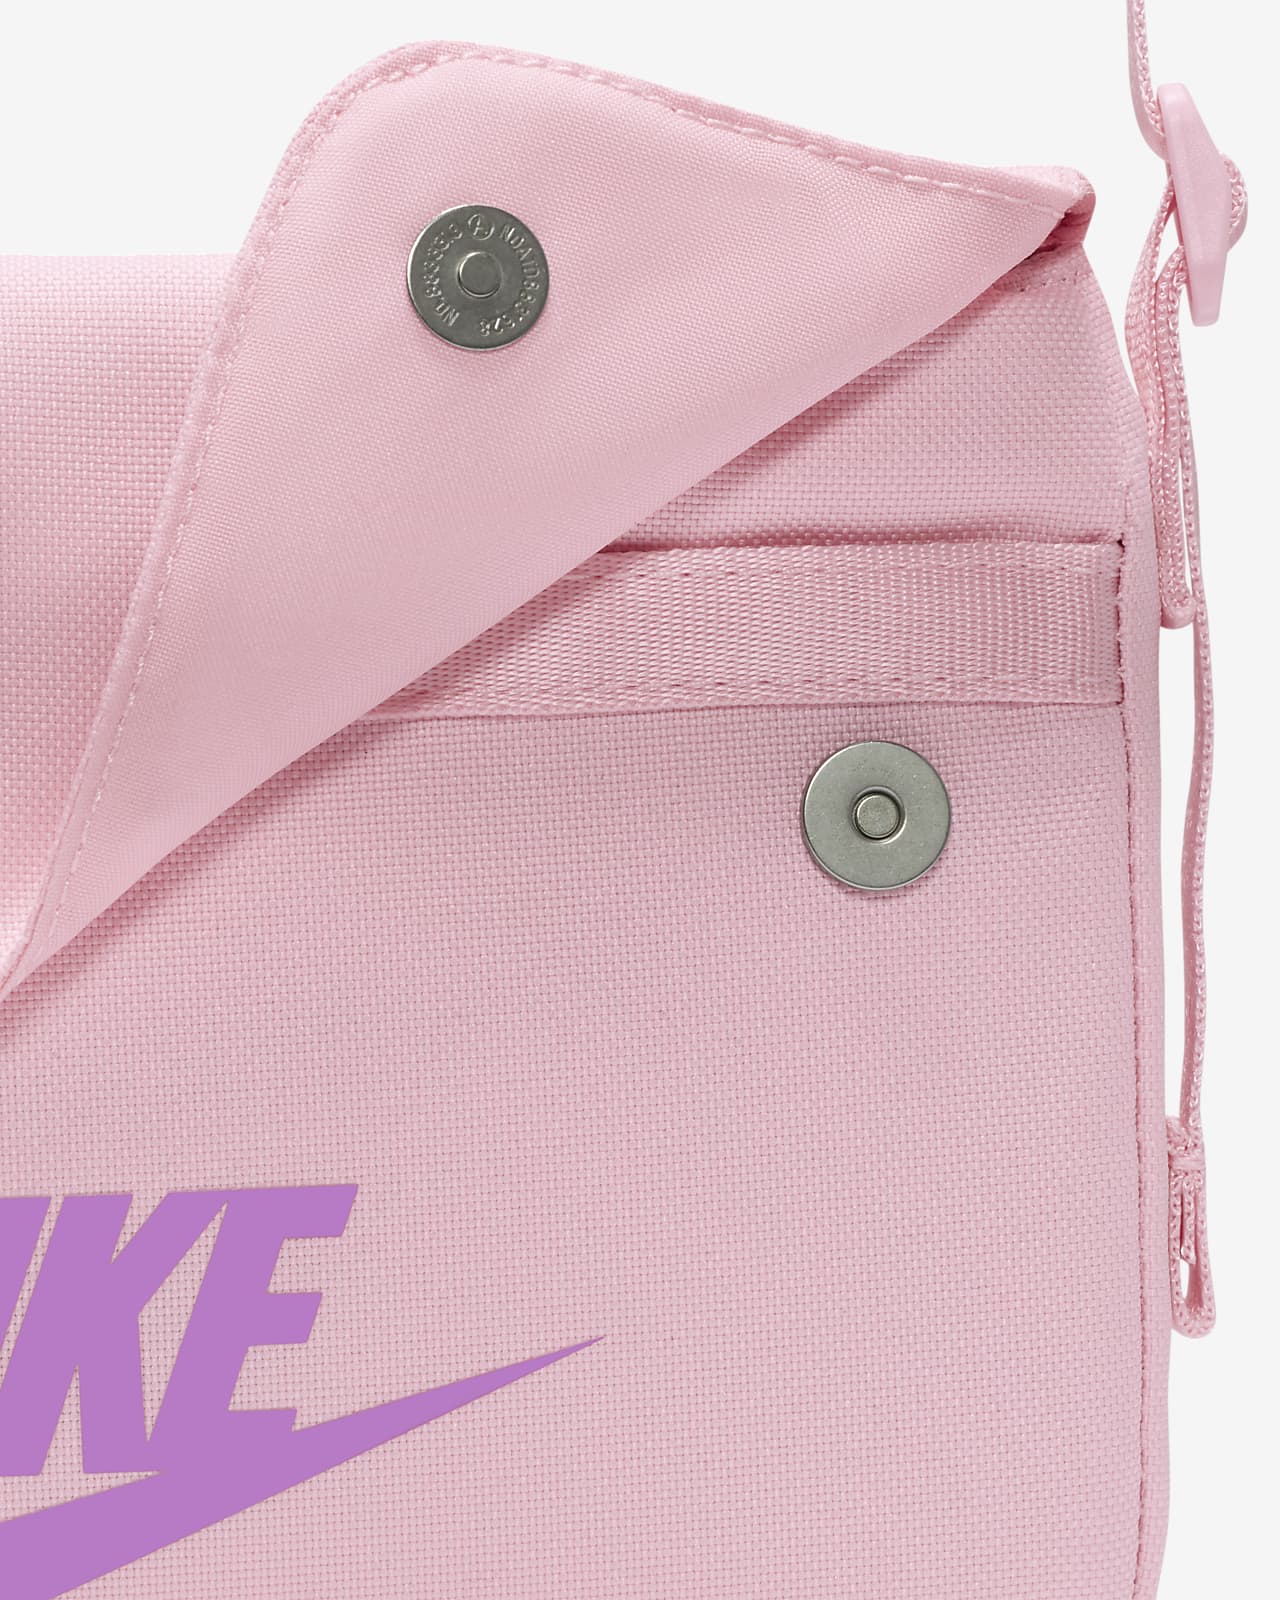 Nike Sportswear Women's Futura 365 Crossbody Bag (3L)